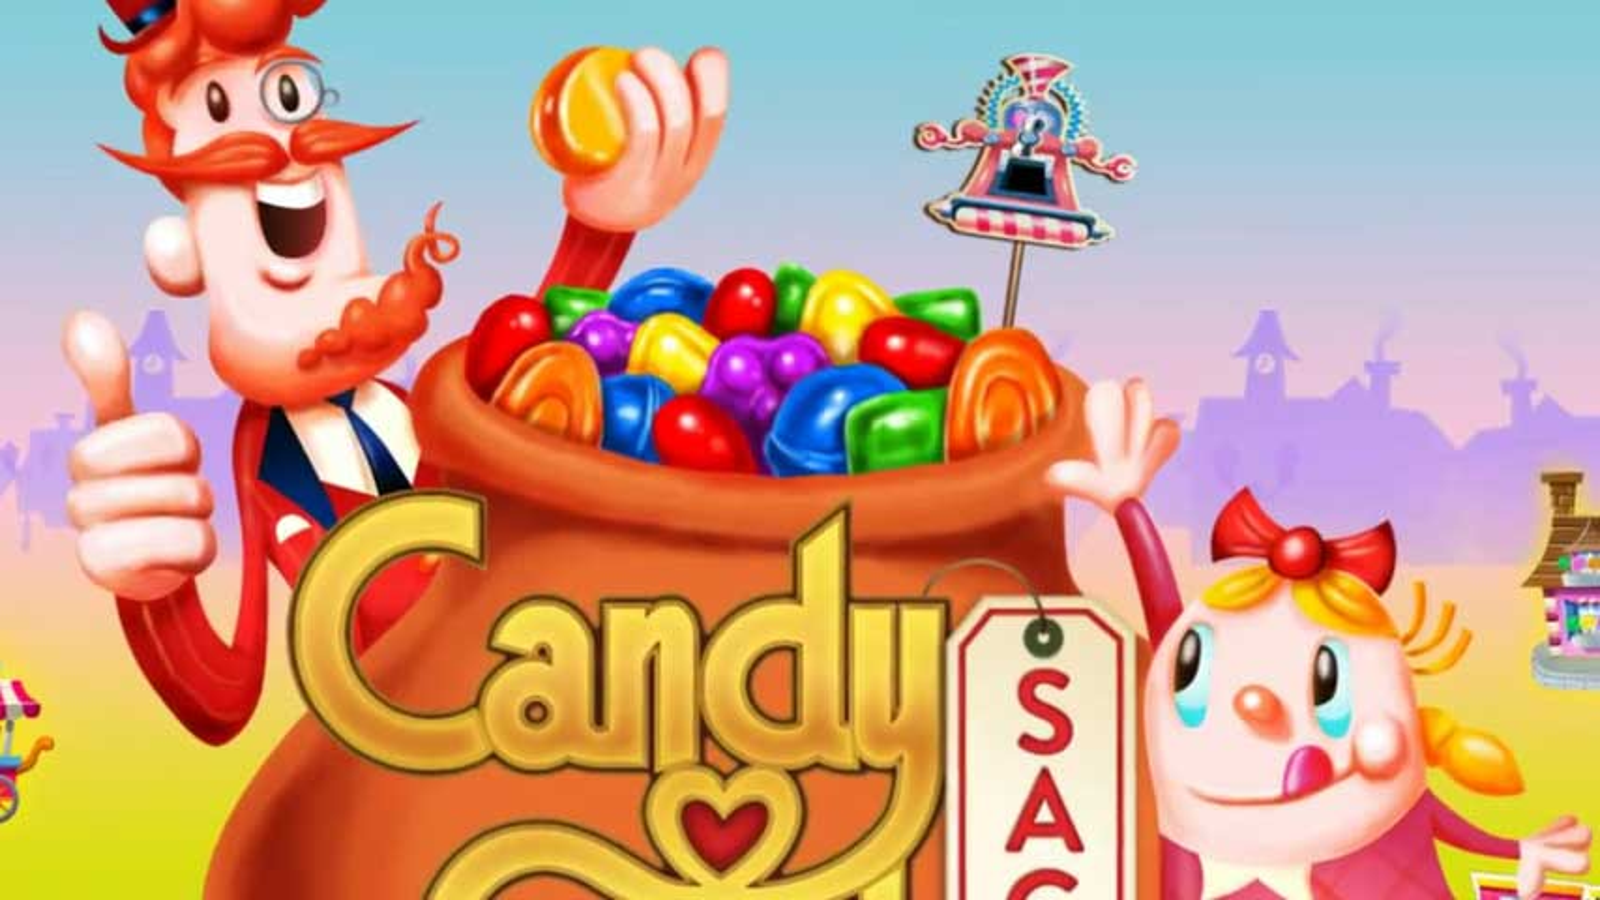 Hanging with the Candy Crush Soda Saga team